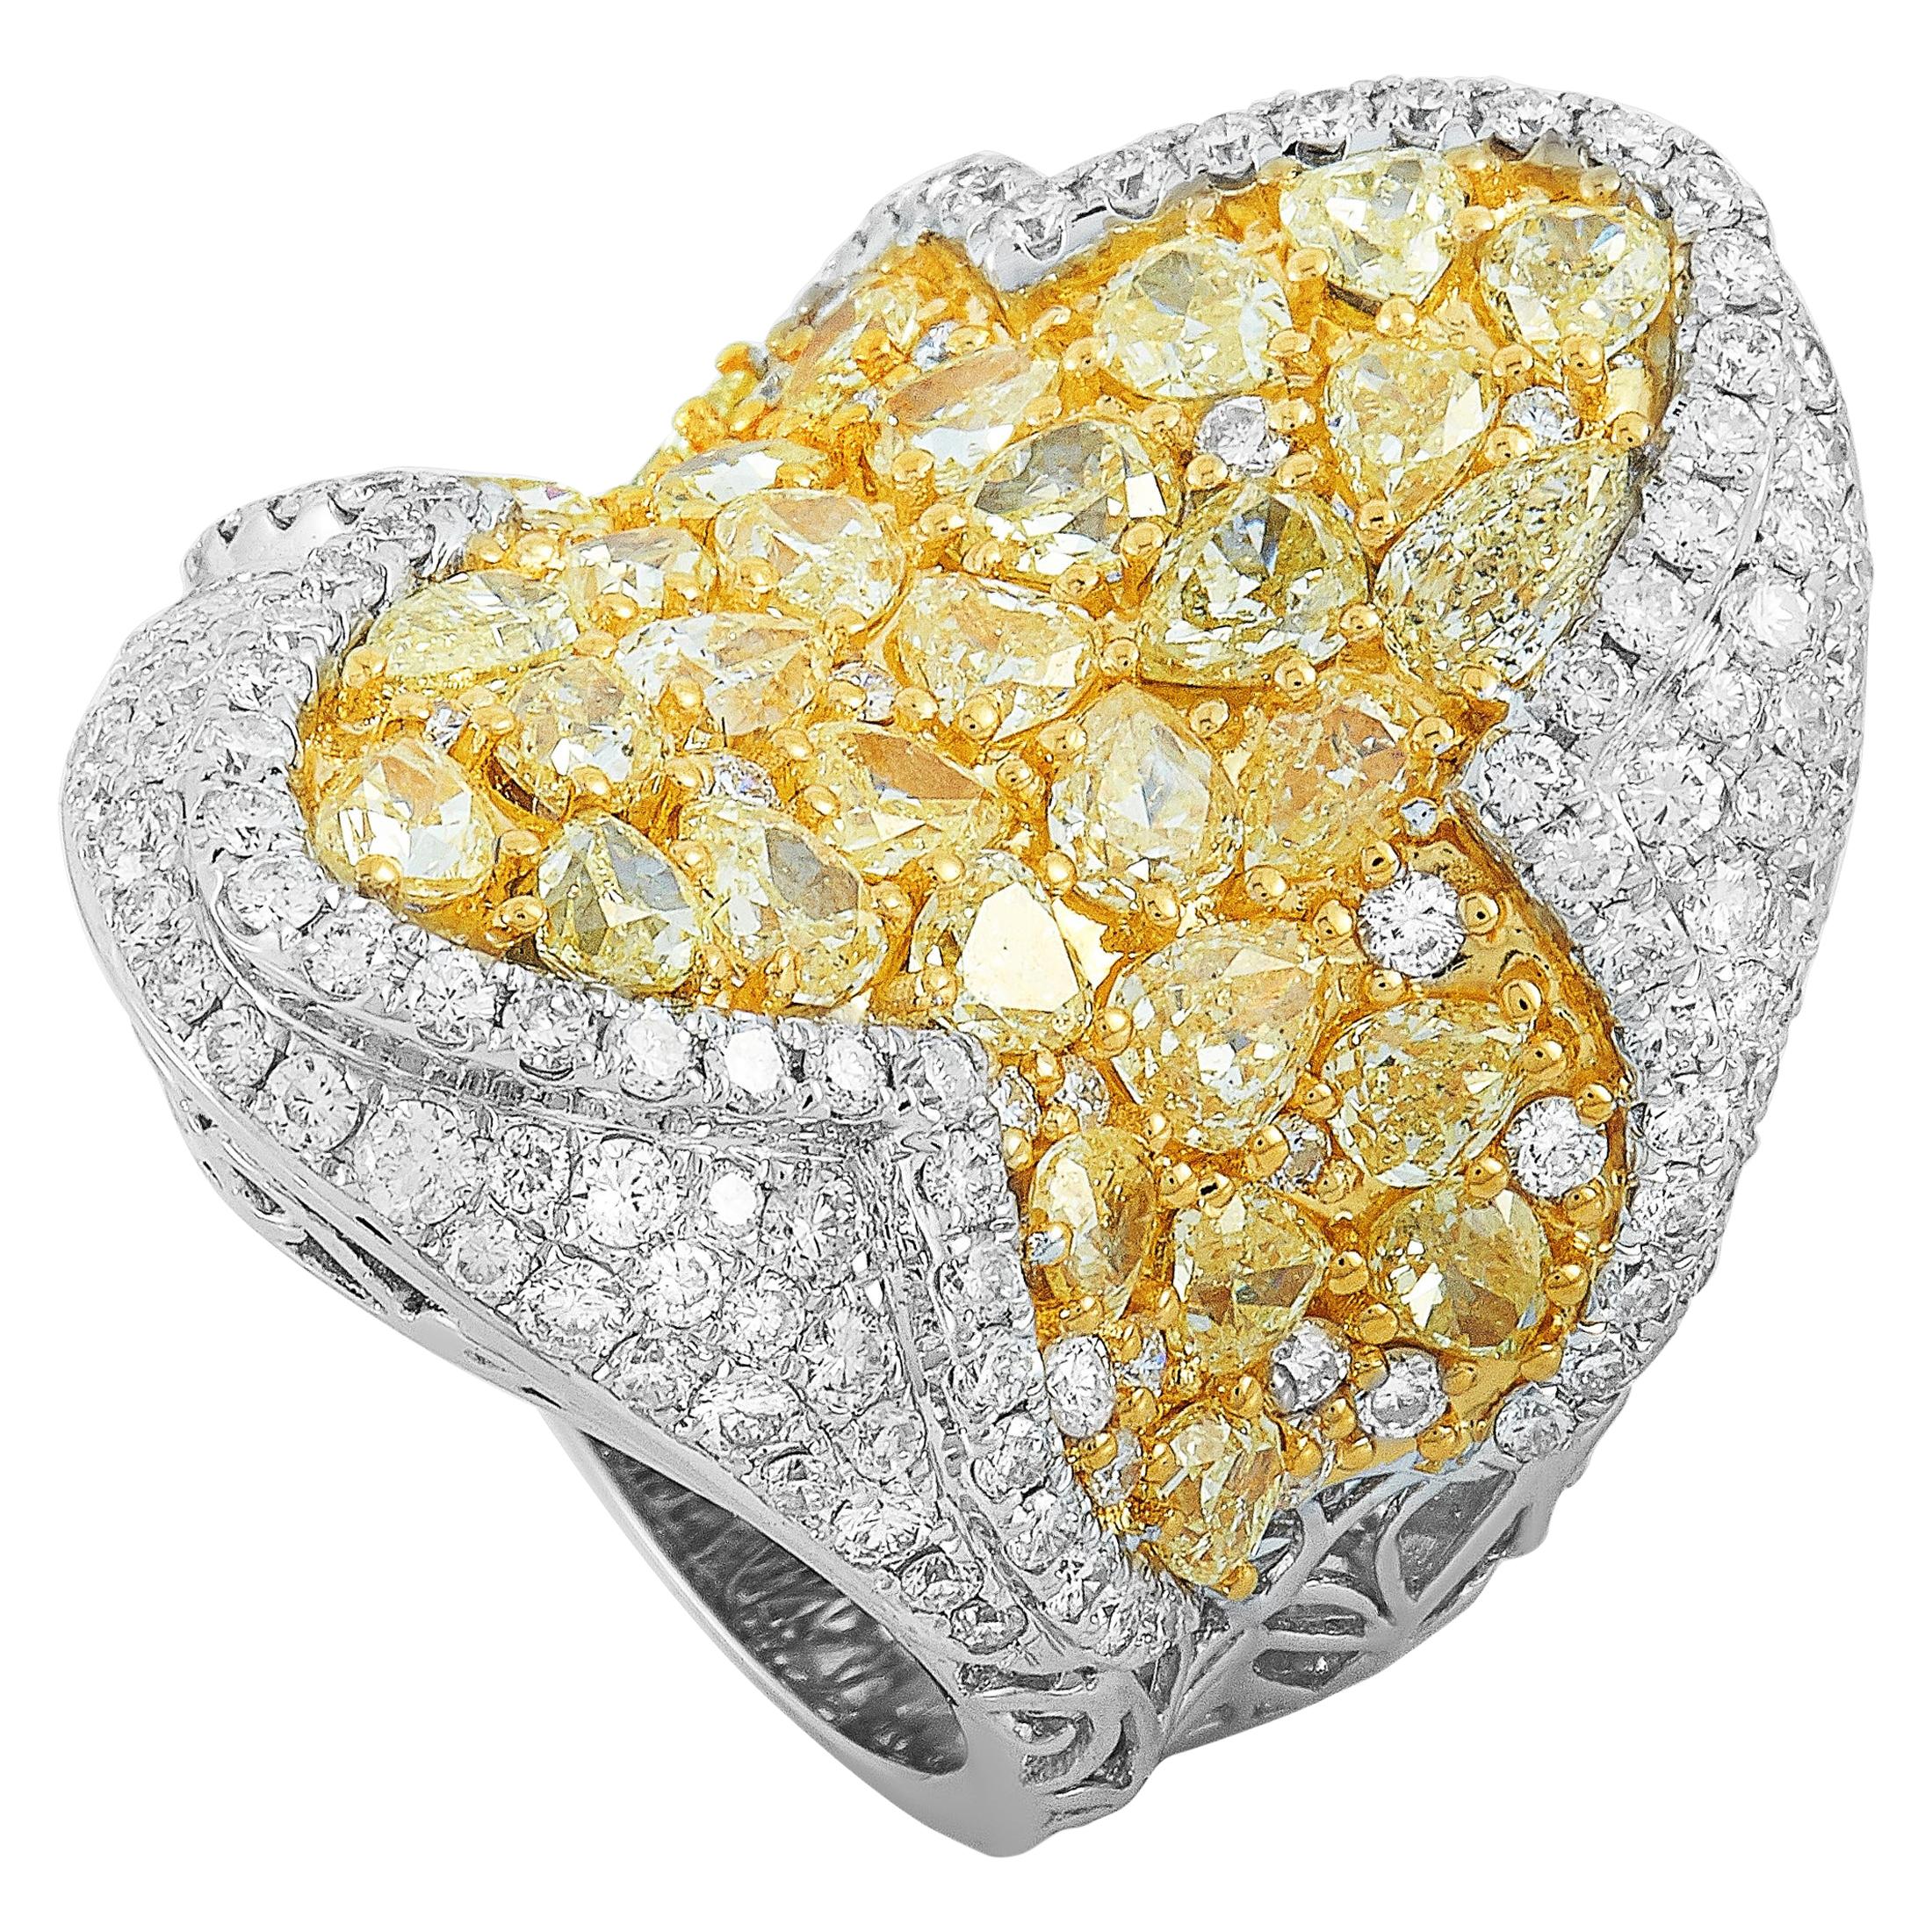 LB Exclusive 18 Karat White Gold 7.09 Carat White and Yellow Diamond Ring